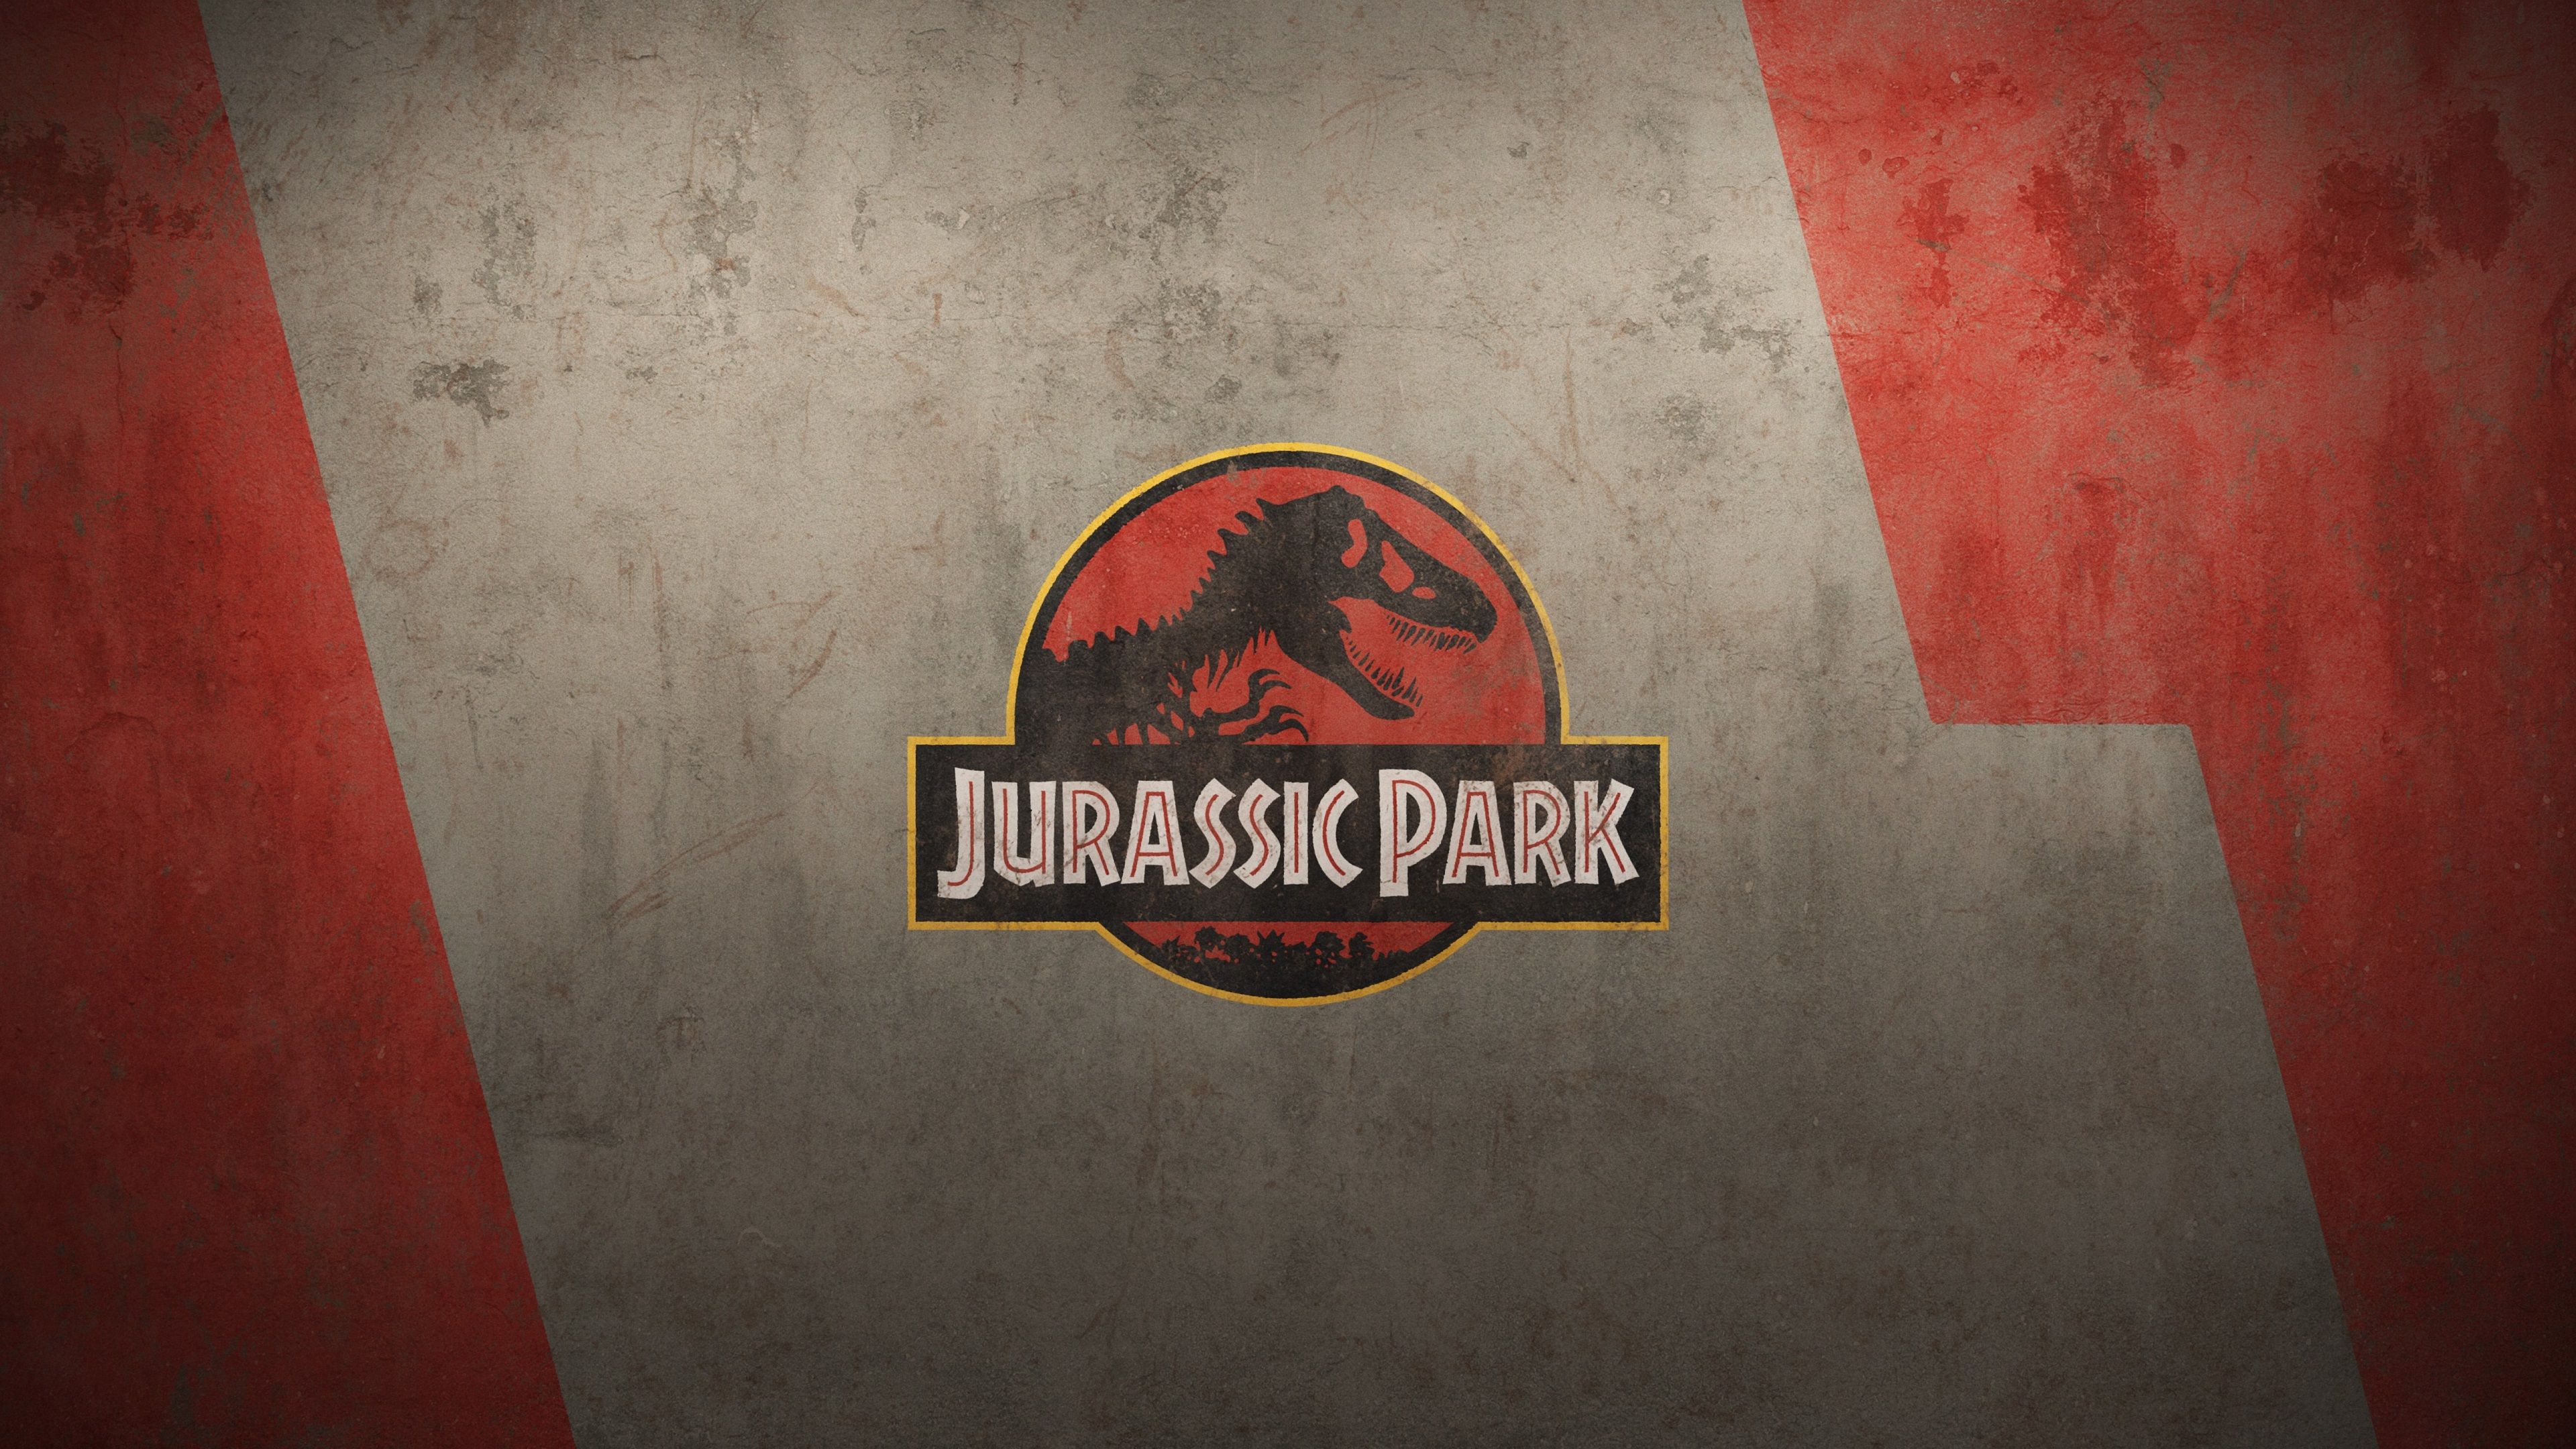 jurassic park 4k wallpaper for pc in HD. Jurassic